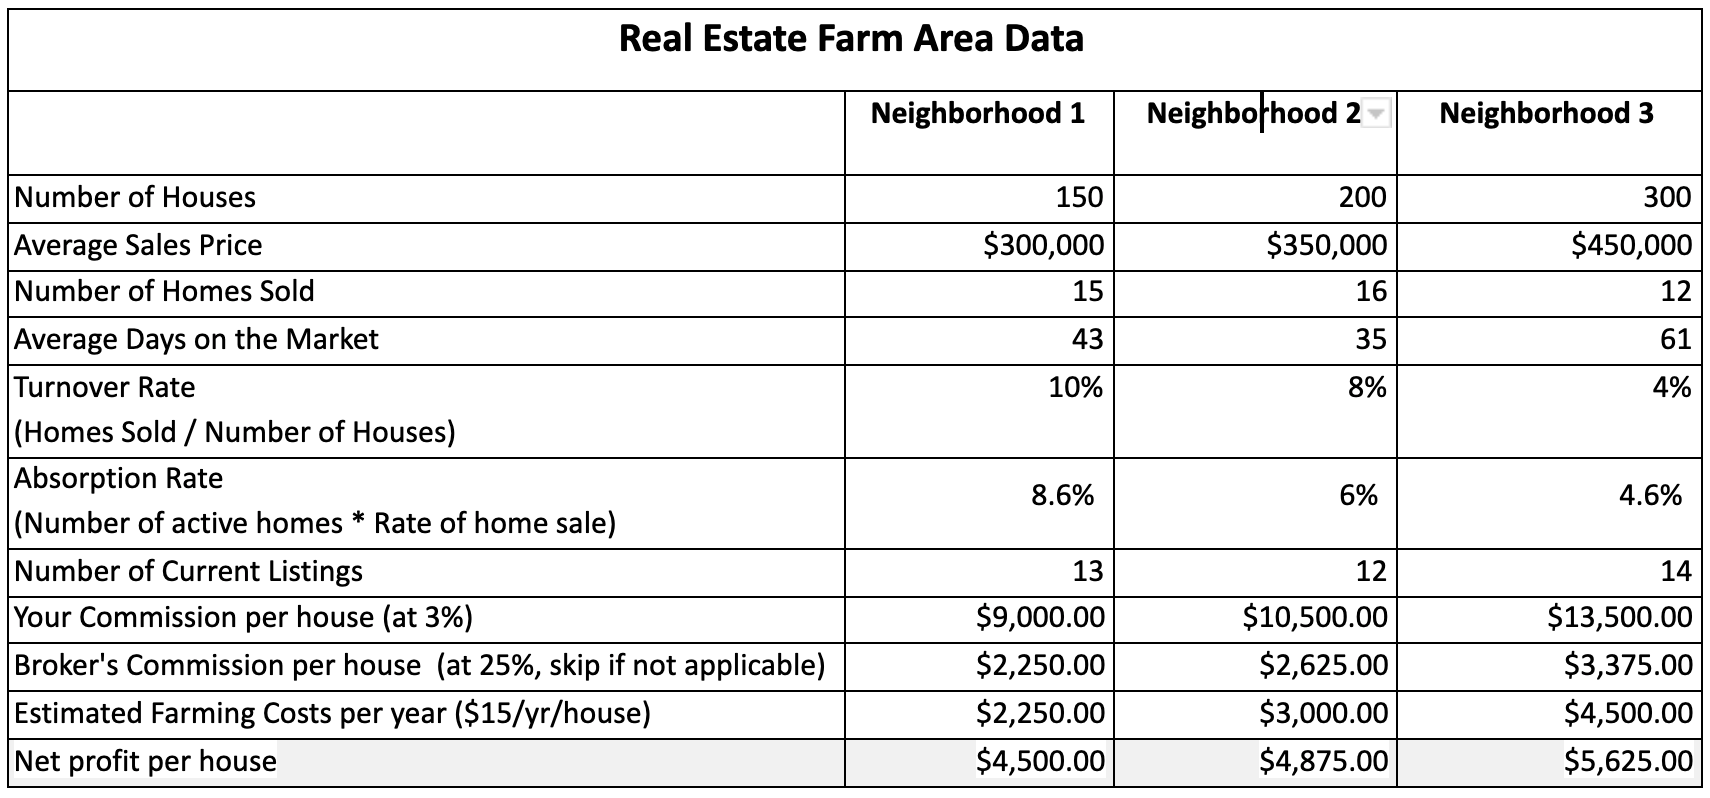 real estate farm area data for 3 neighborhoods